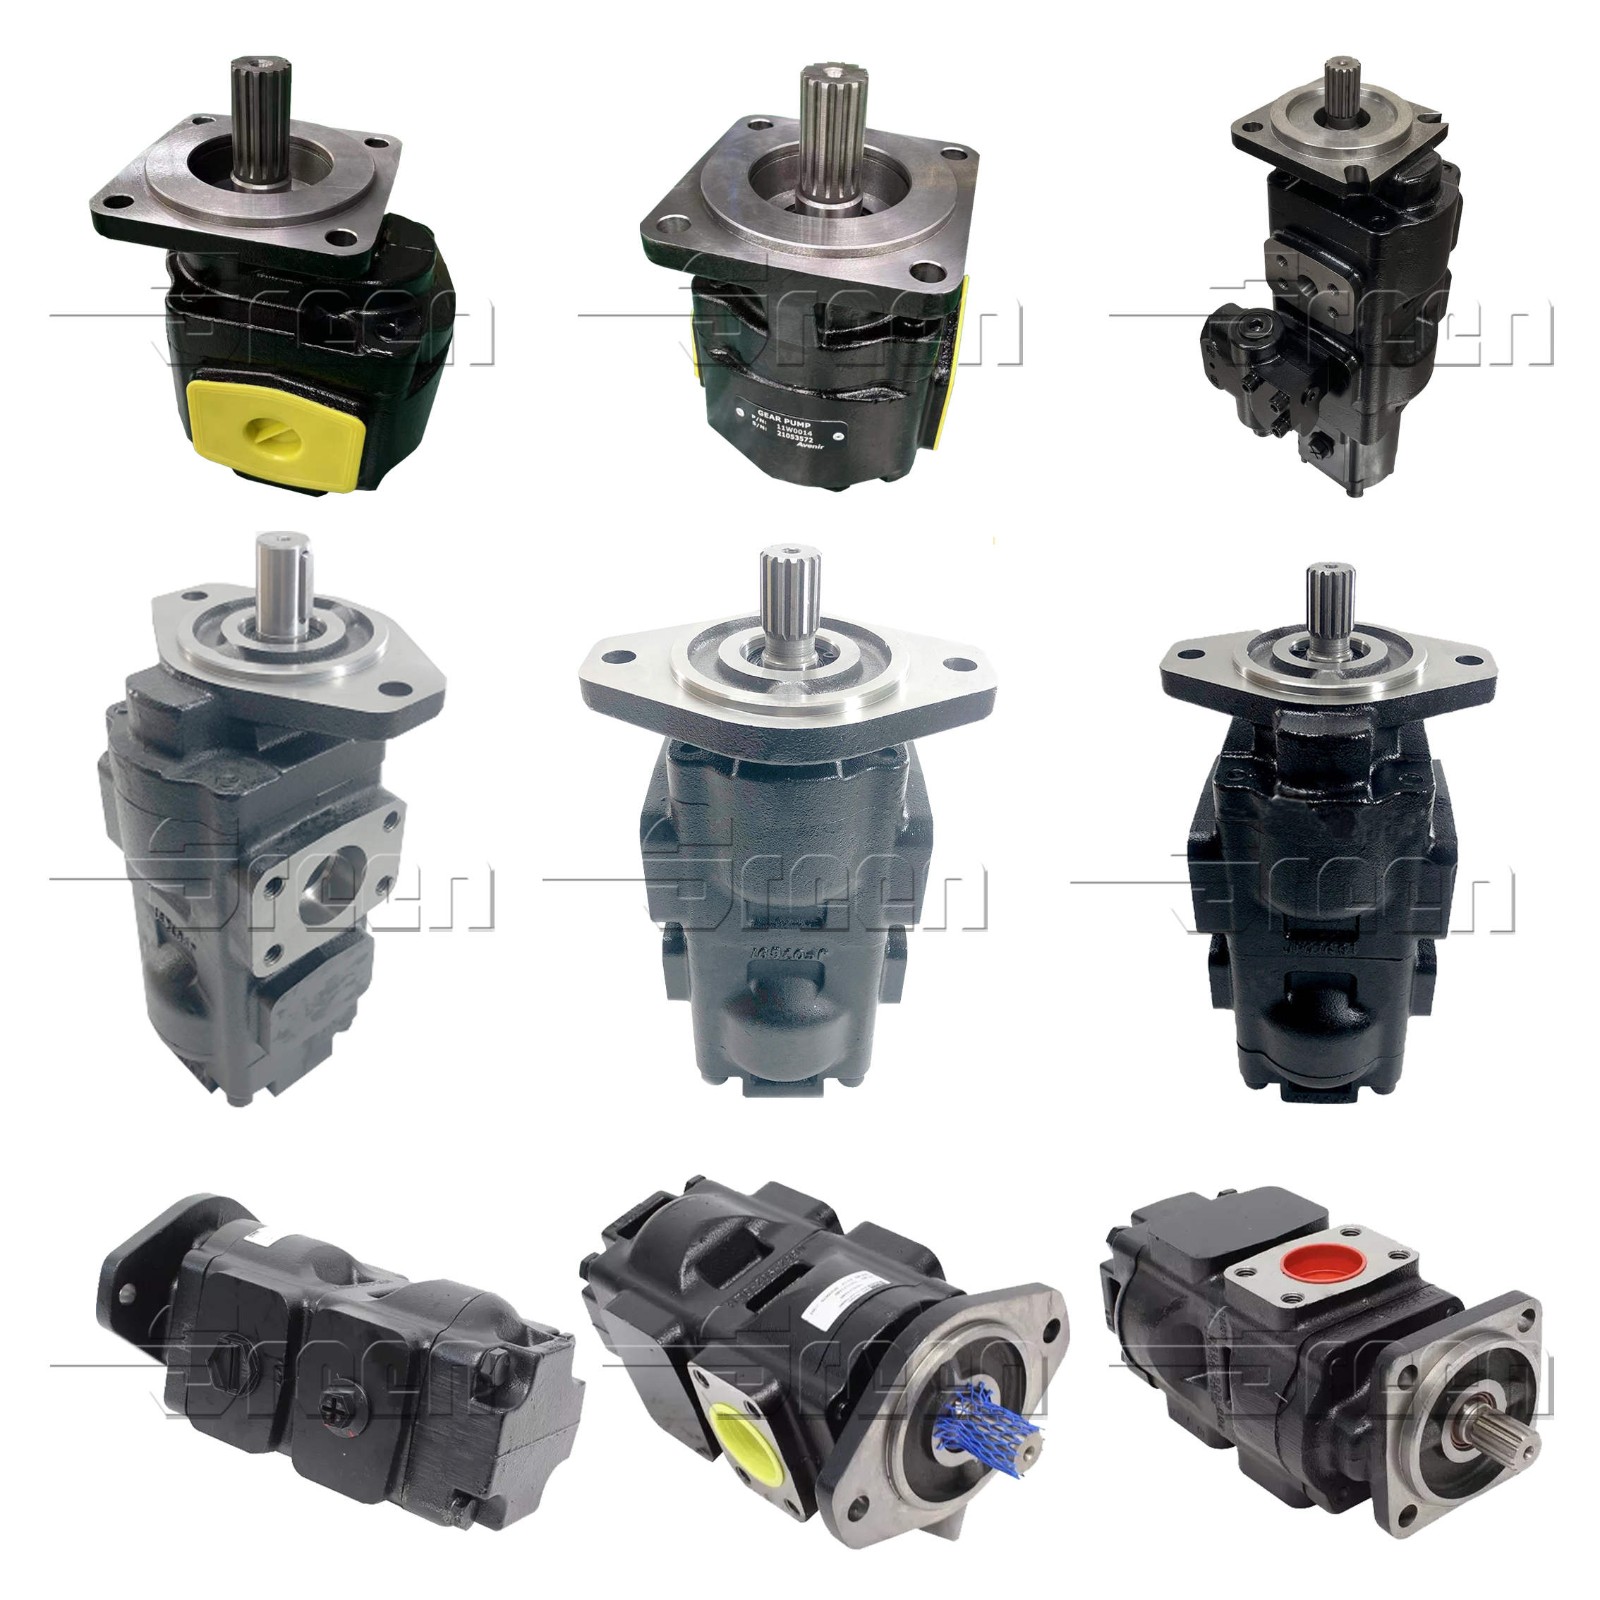 JCB Series high pressure gear pumps